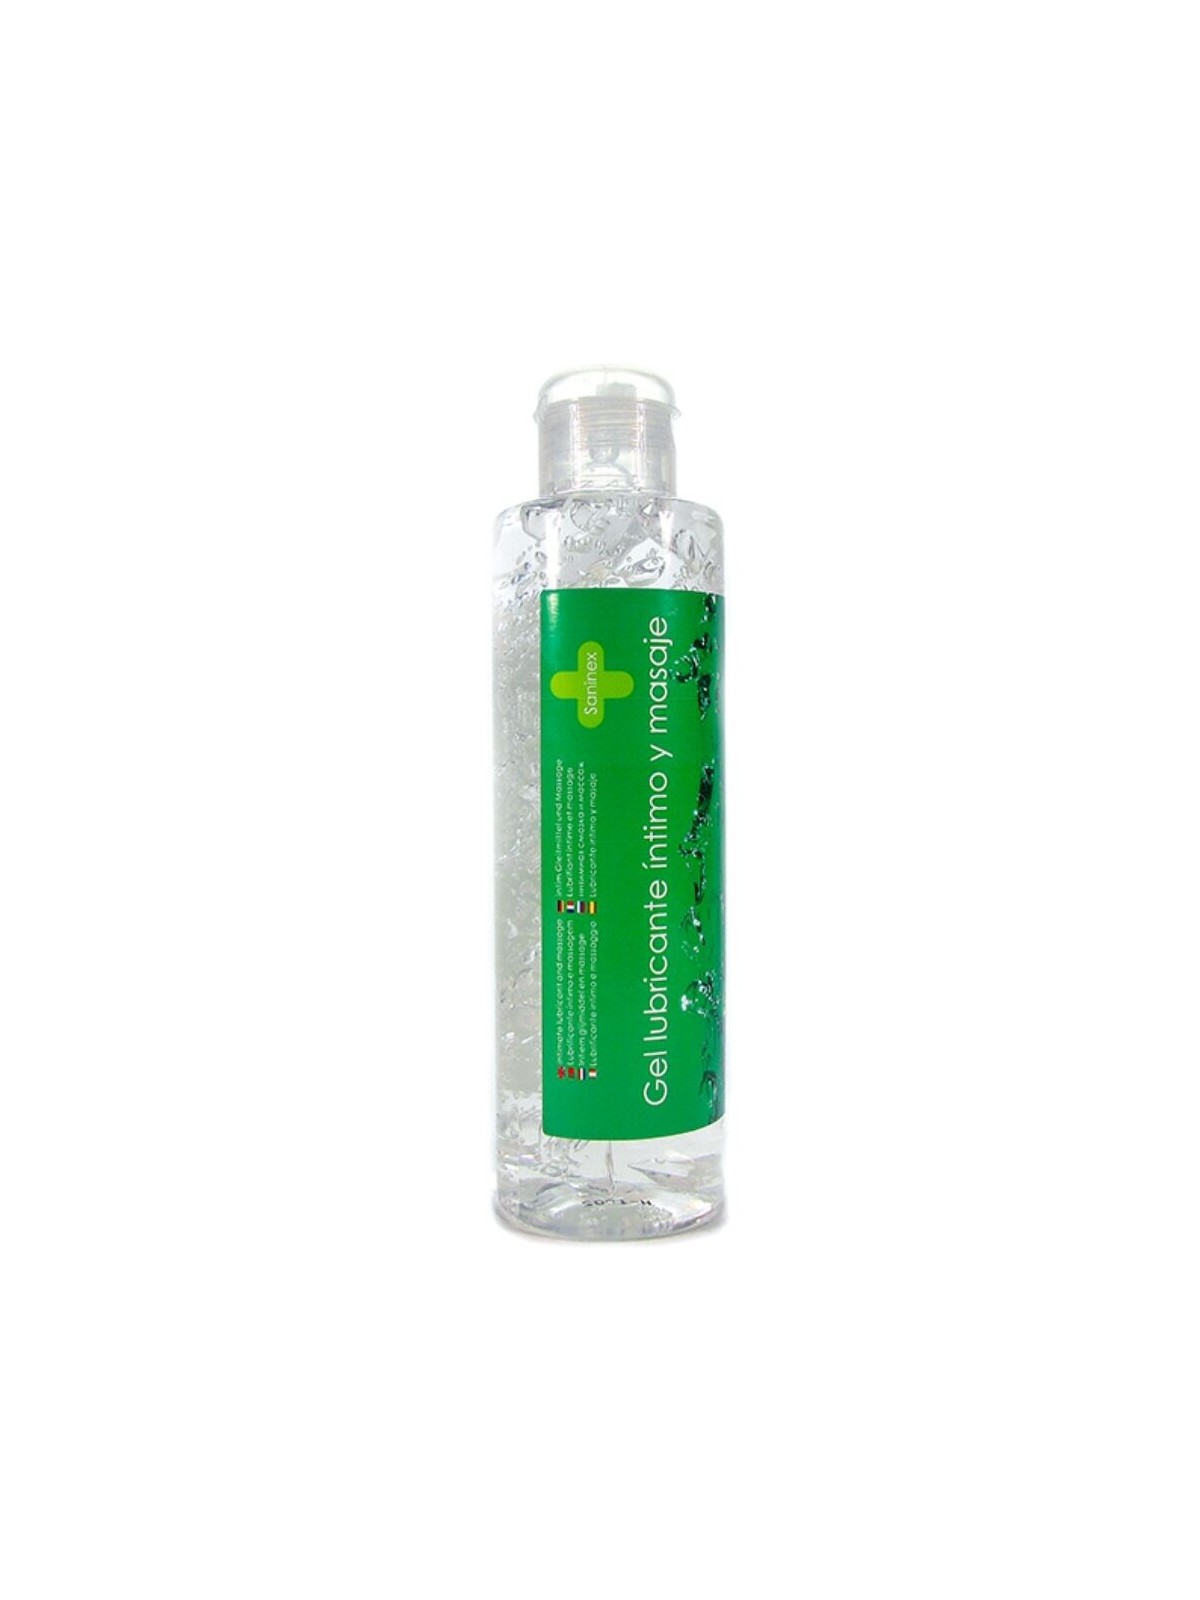 Lubricante Saninex 2 En 1 + Power + Time 200 ml - Comprar Crema masaje sexual Saninex - Lubricantes base agua (1)